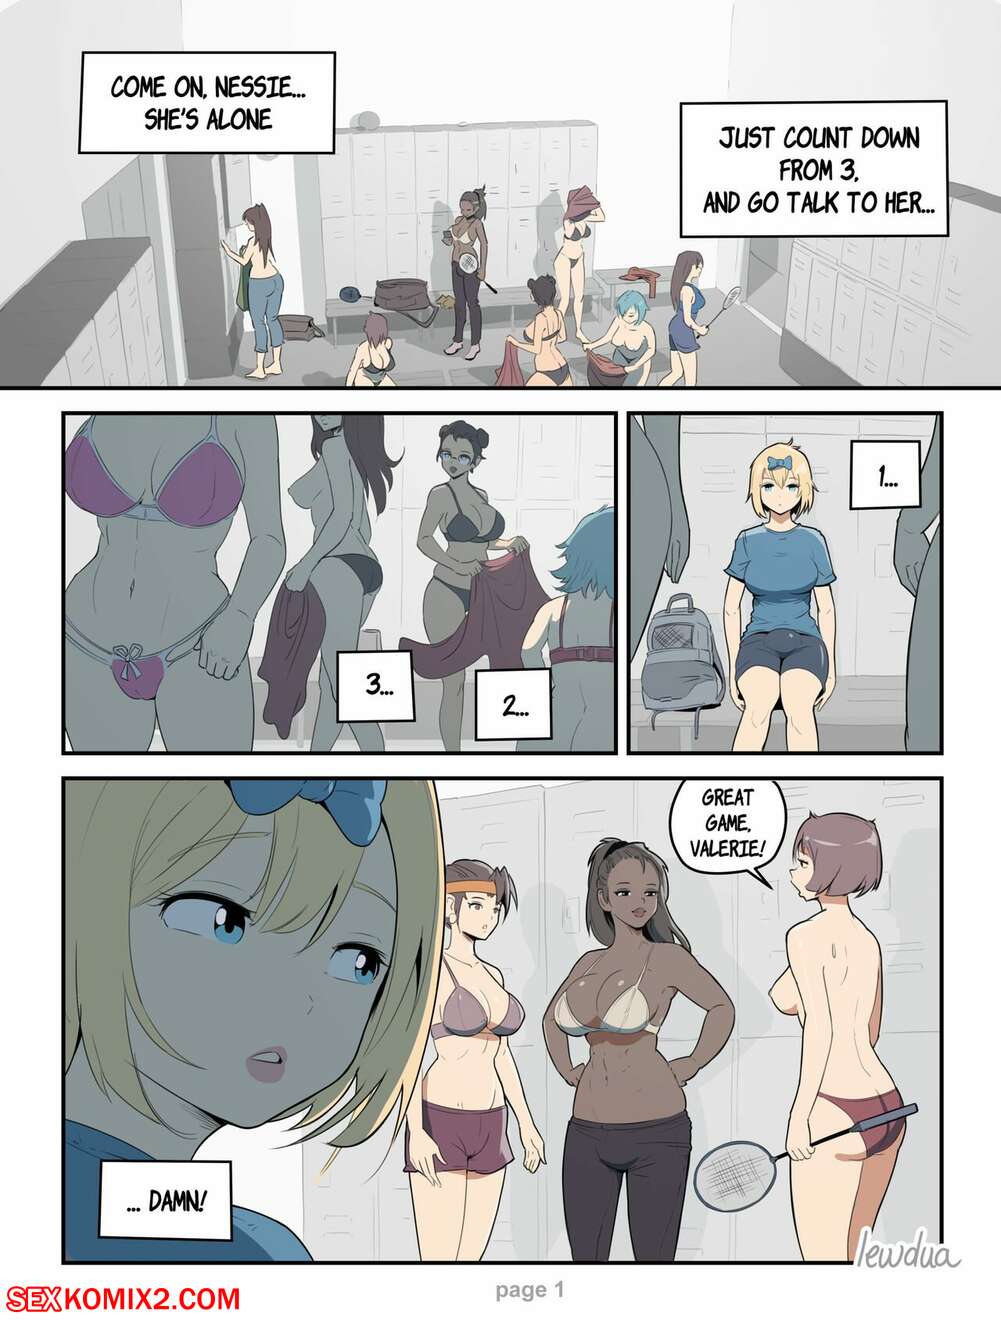 Ladyboy locker room porn comics